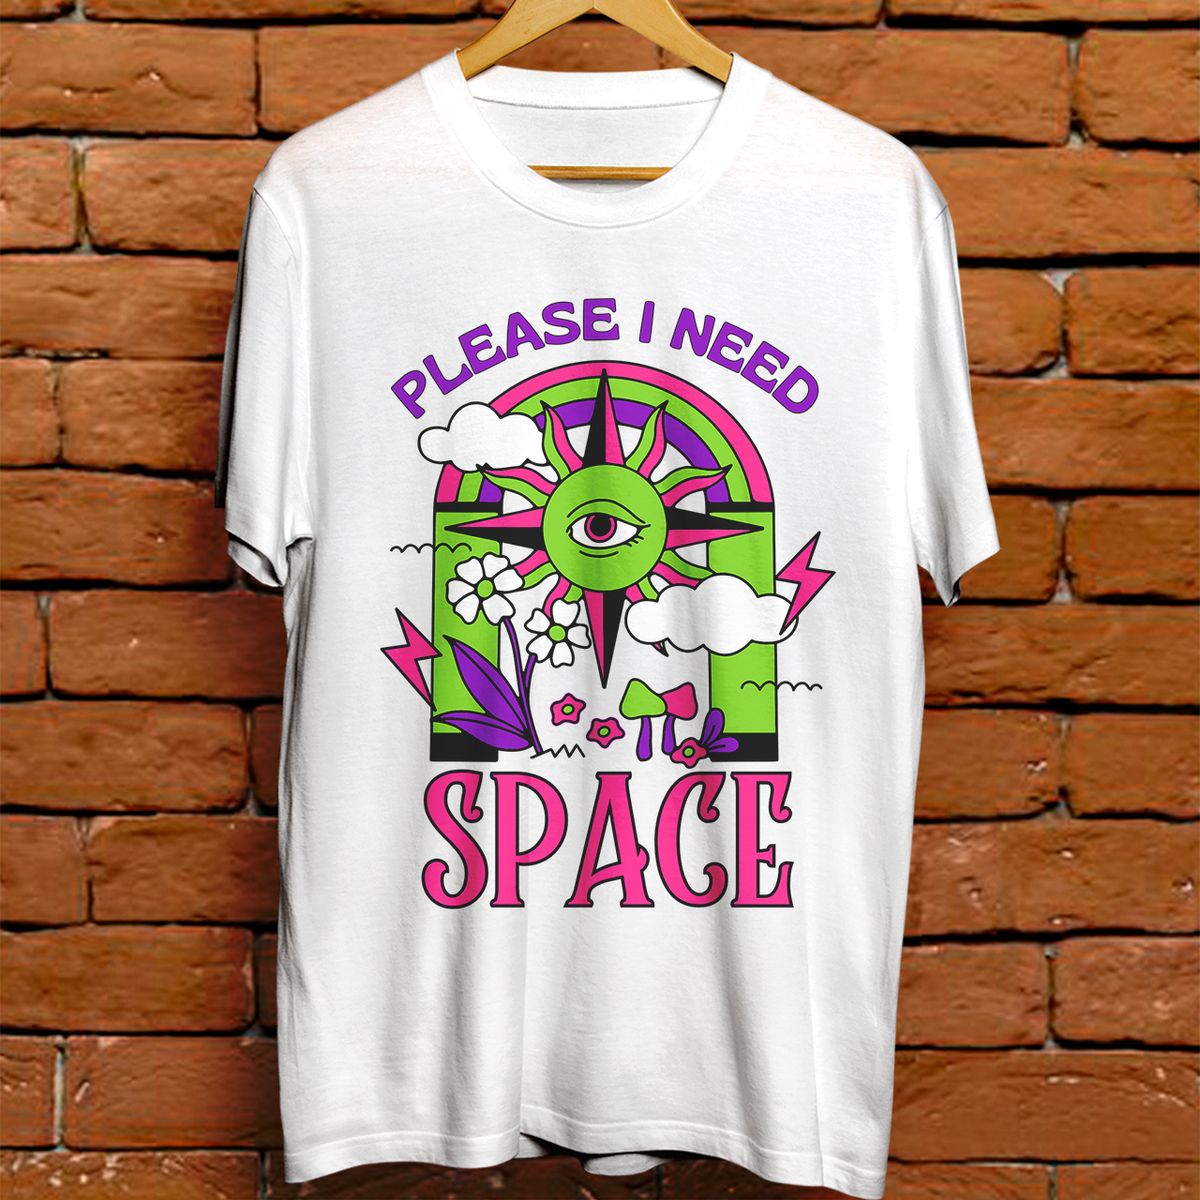 Nome do produto: Camiseta - Please i need my space